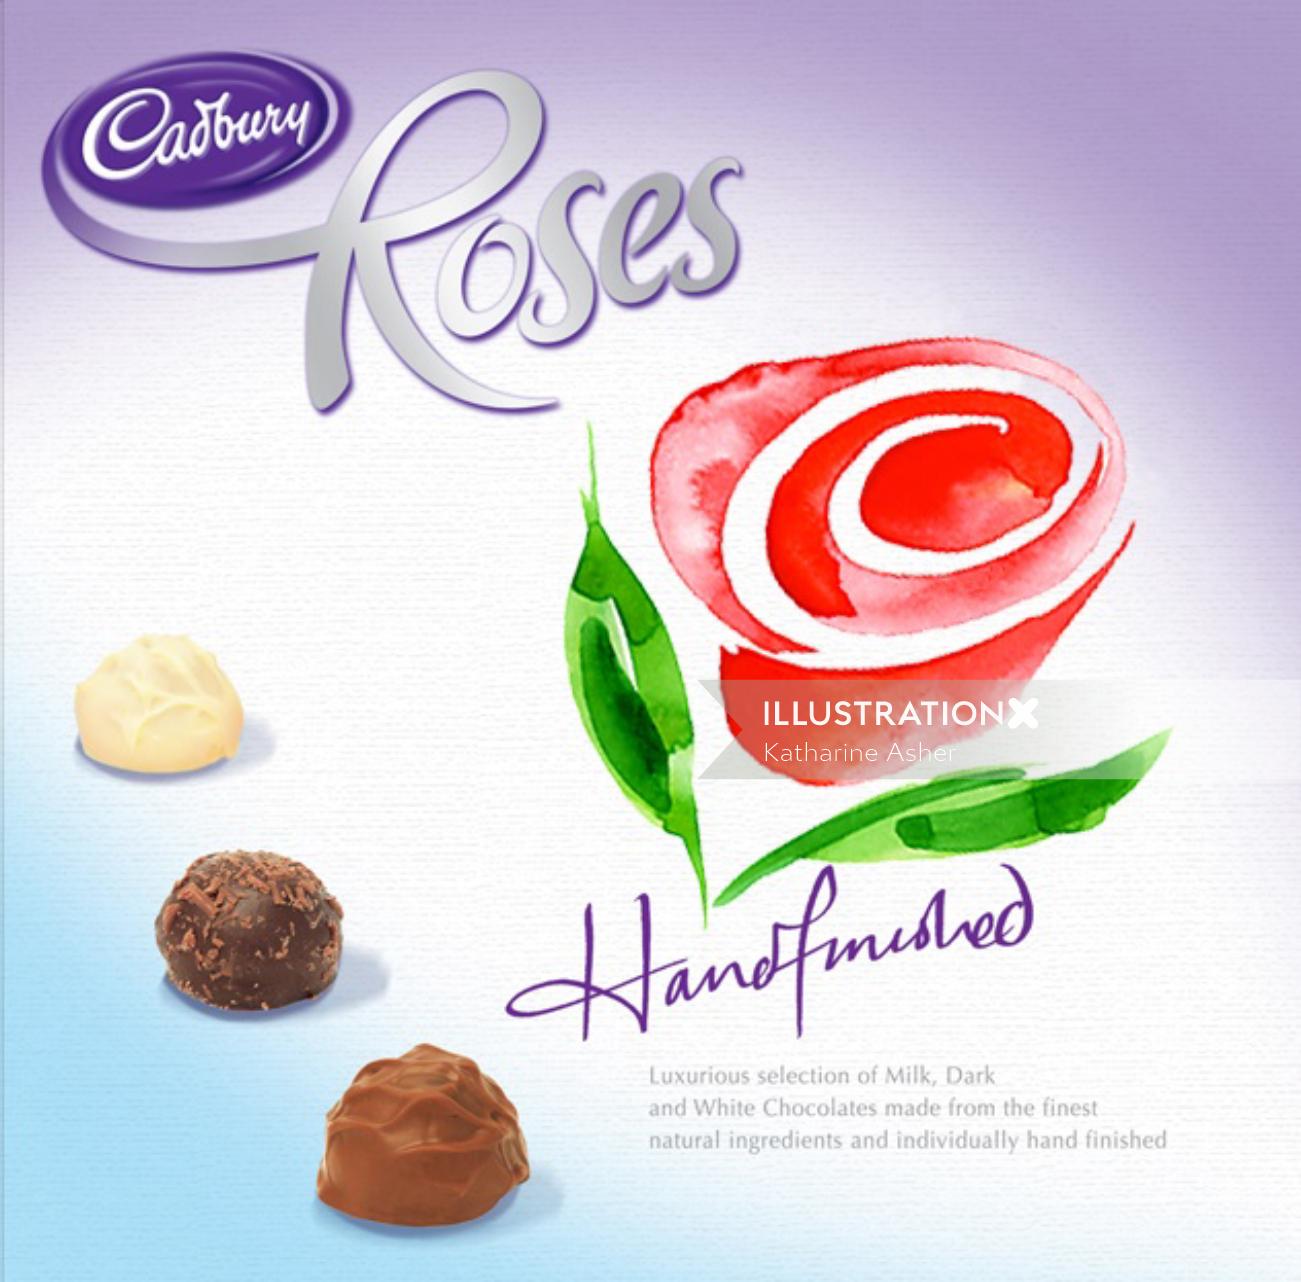 Ilustración de bombones de rosas Cadburys por Katharine Asher